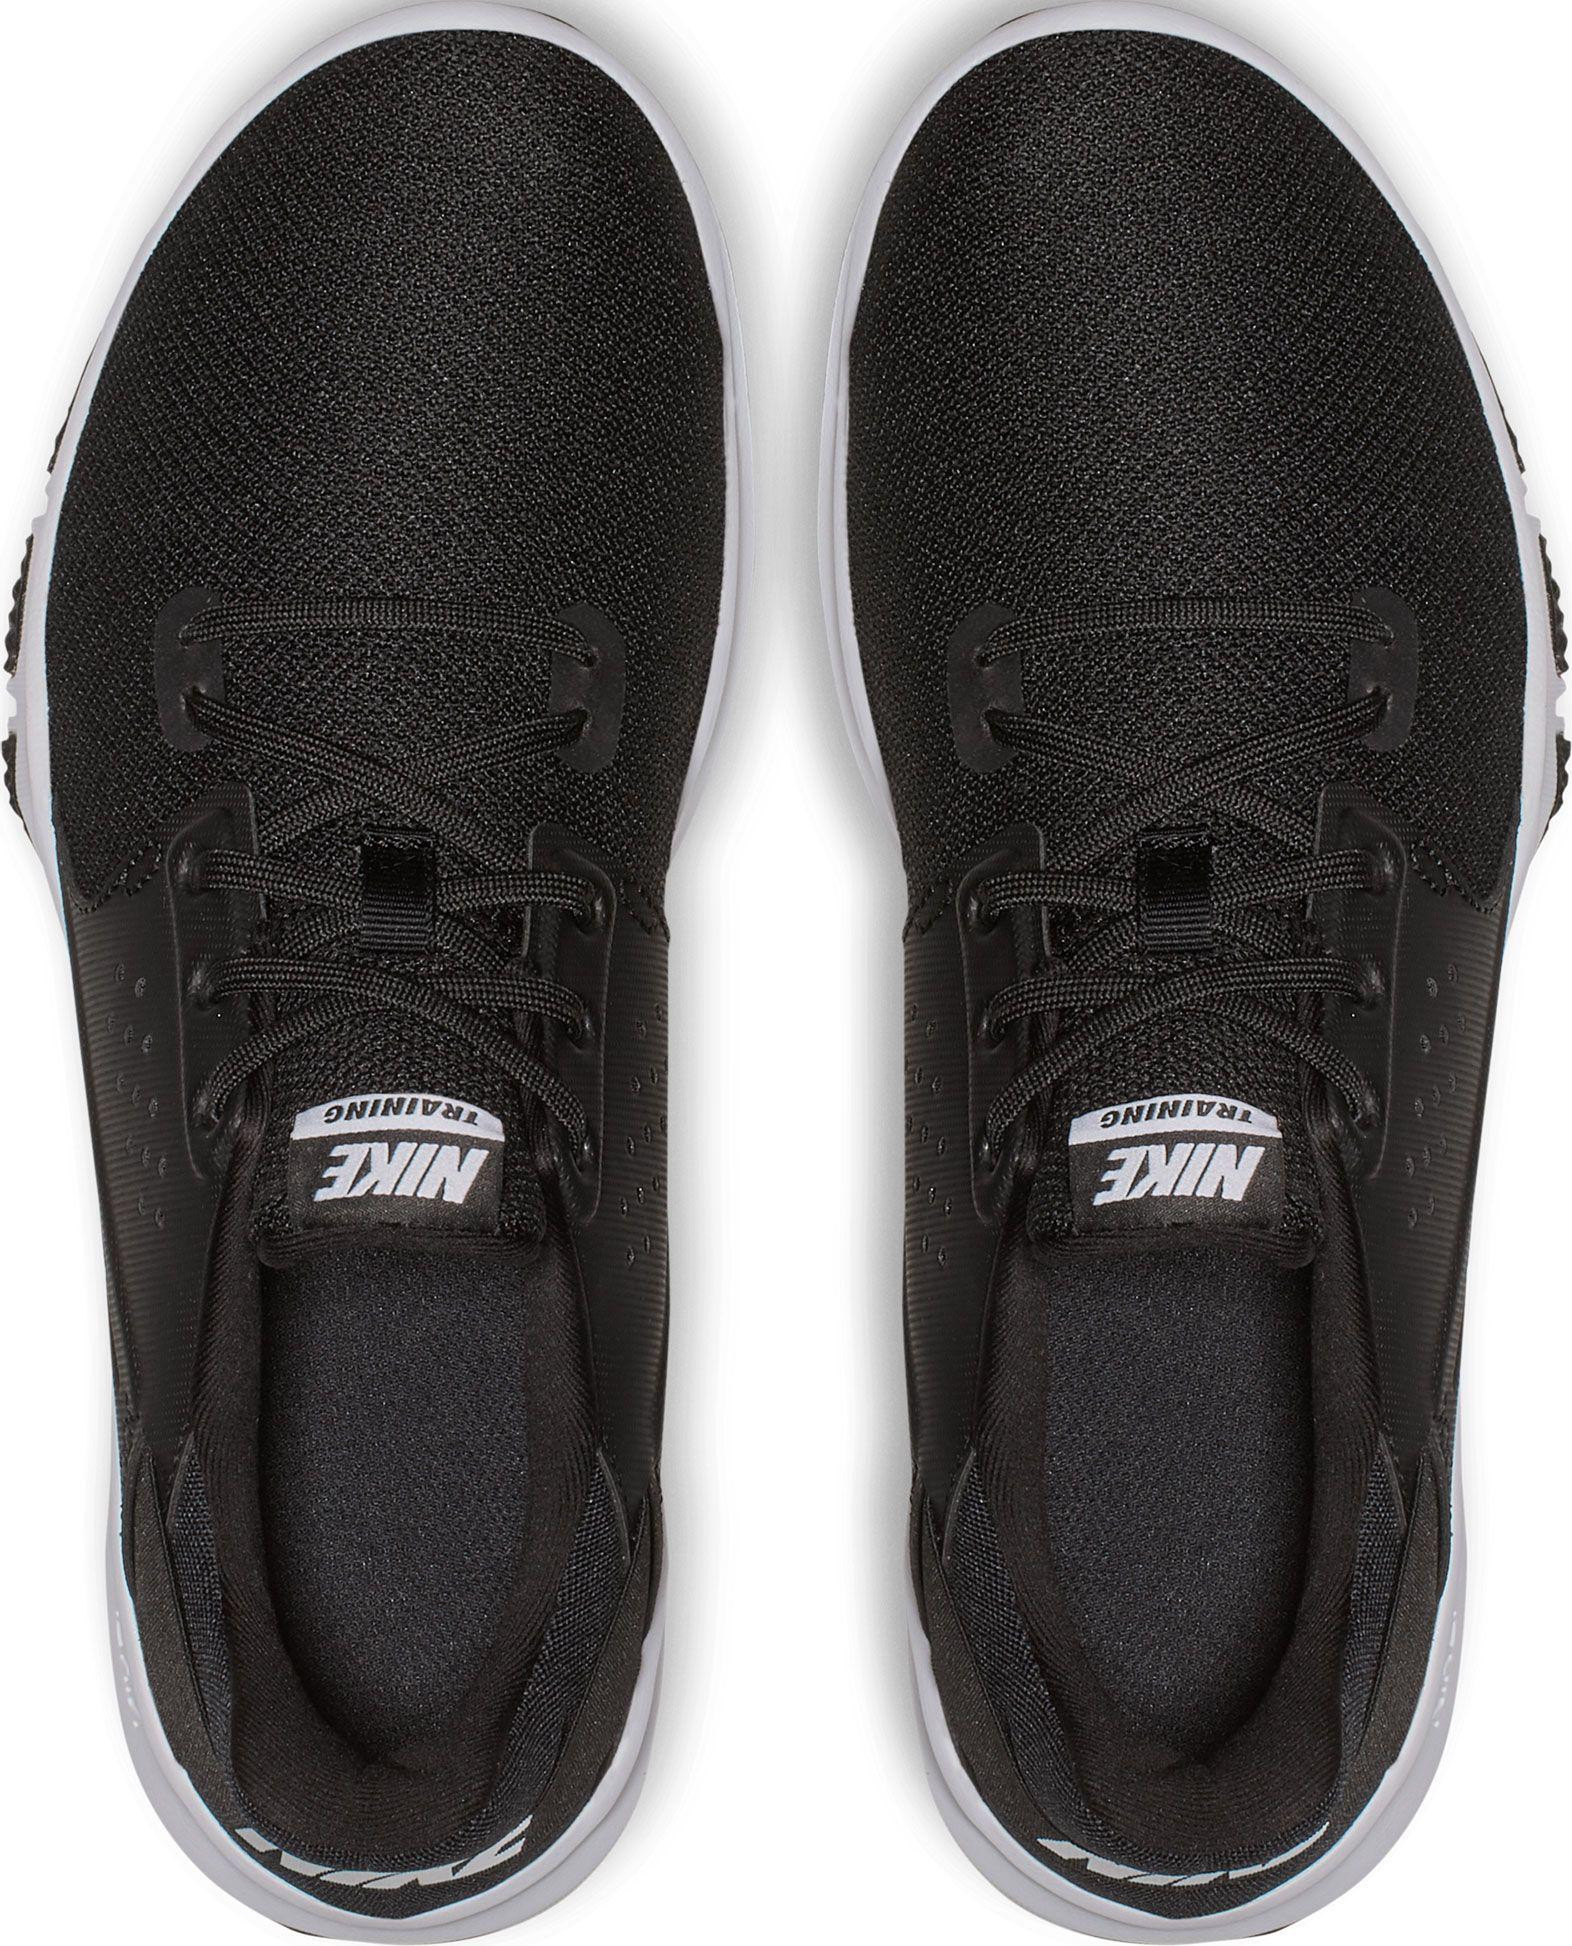 Nike Rubber Flex Control 3 Training Shoes in Black/Black/White (Black ...